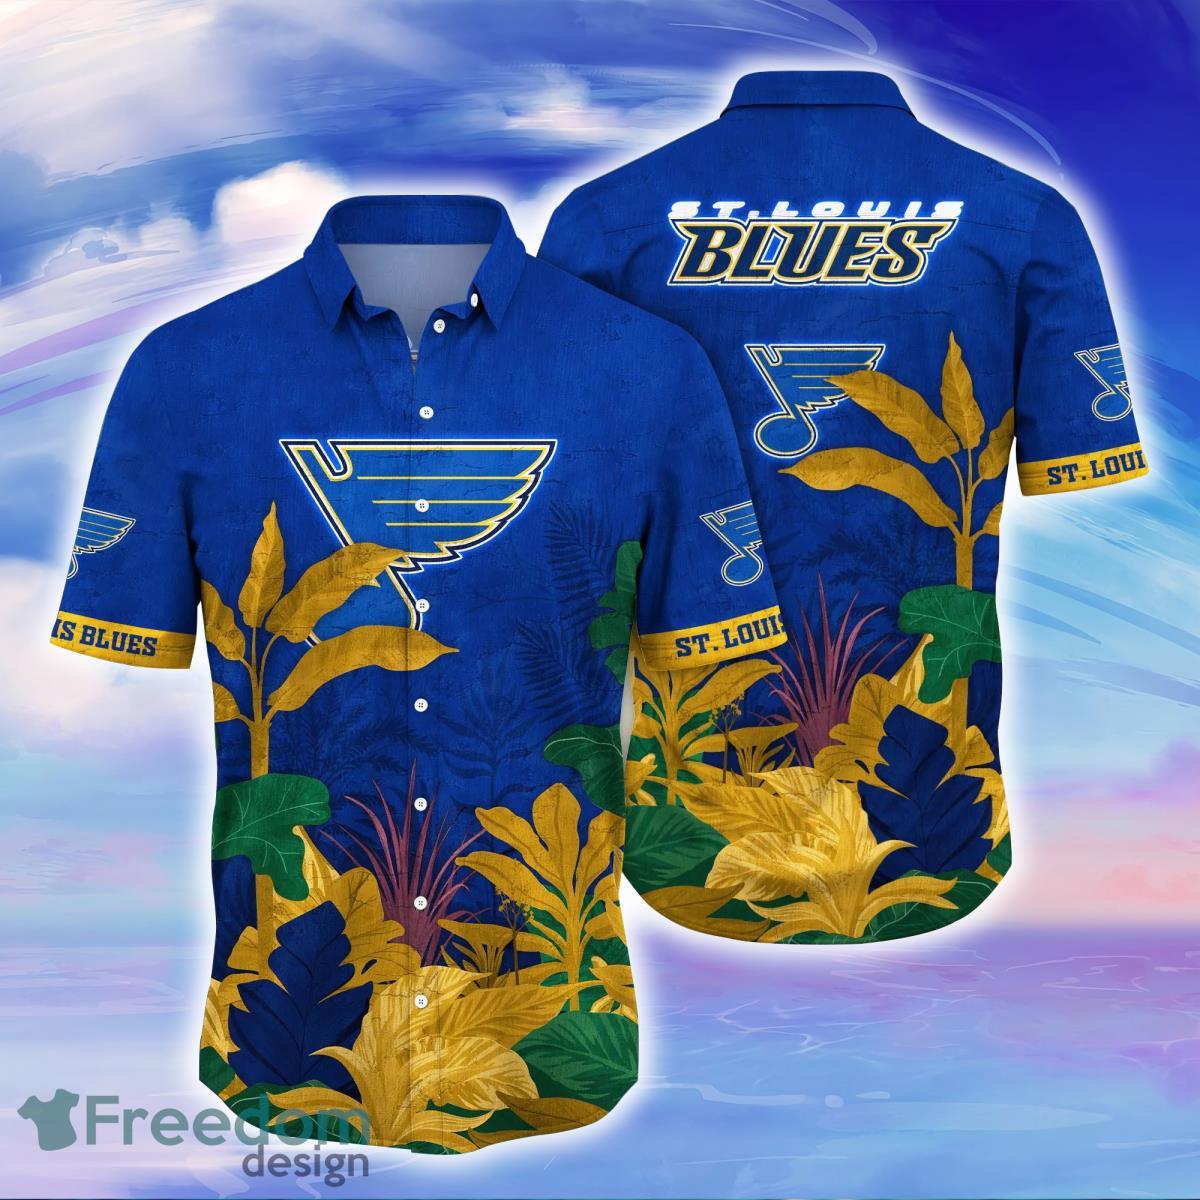 St. Louis Blues NHL Flower Hawaiian Shirt Great Gift For Men Women Fans -  Freedomdesign